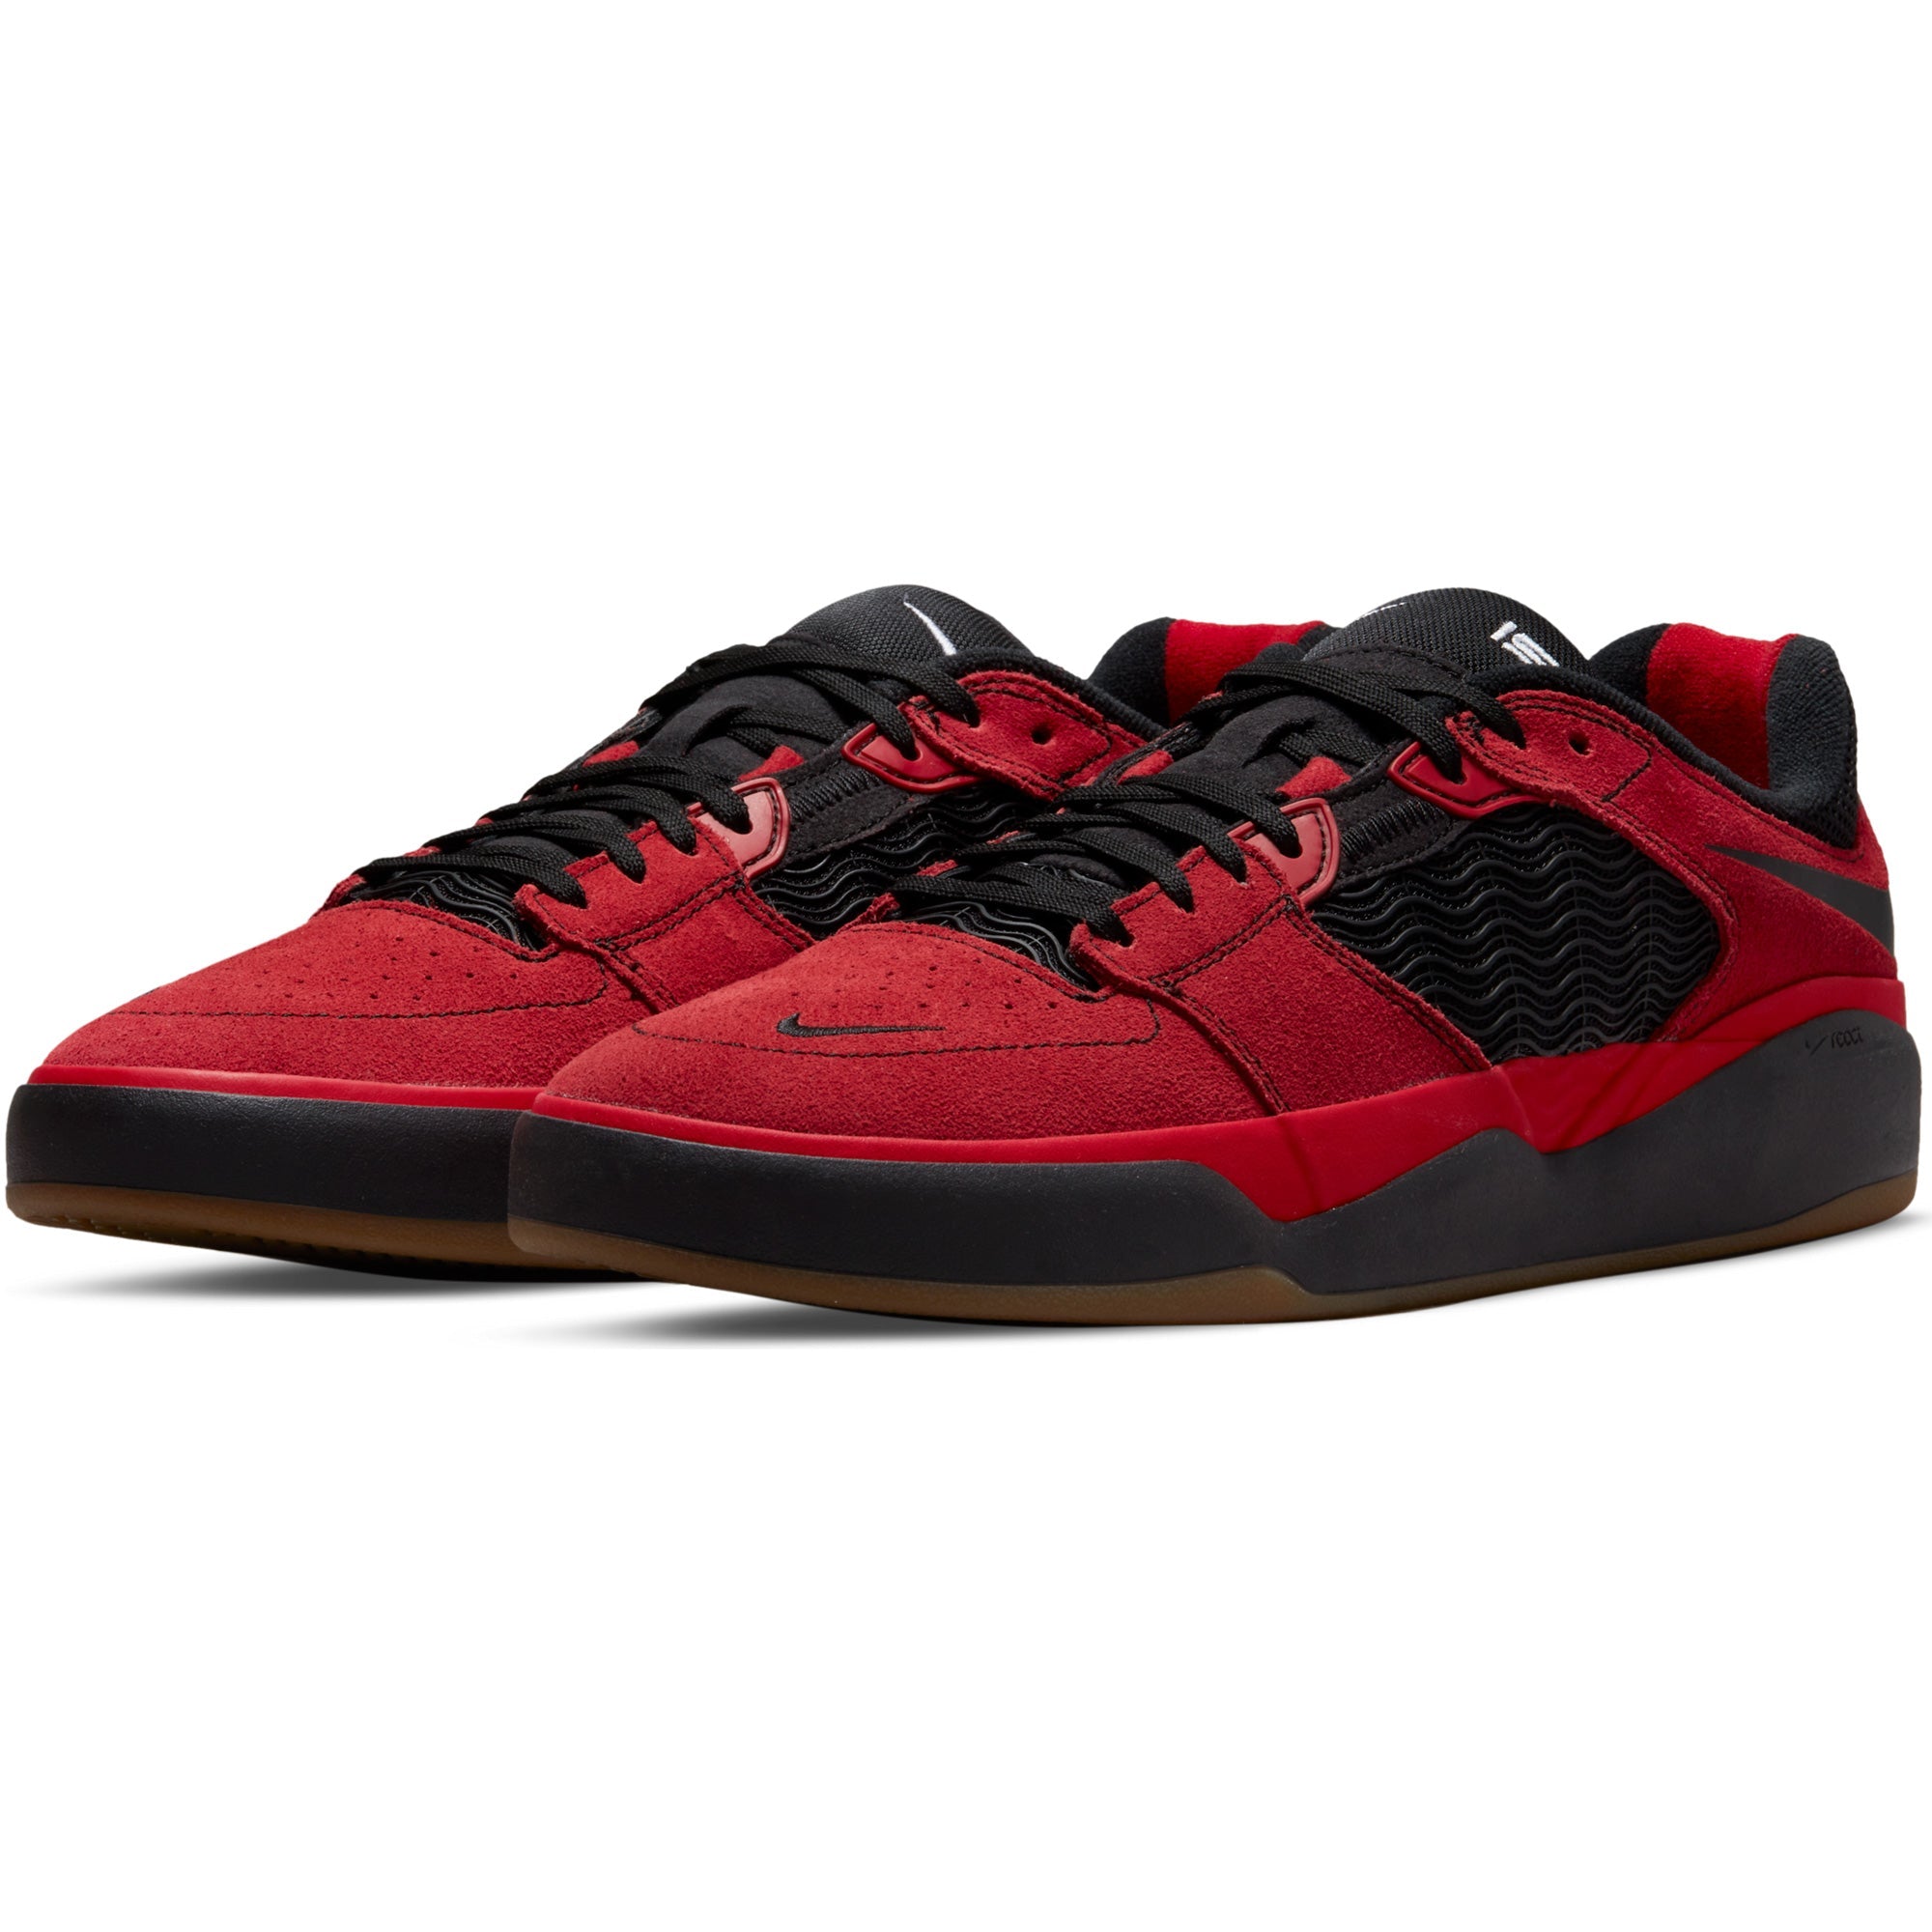 Nike SB Ishod Pro - Varsity Red/Black